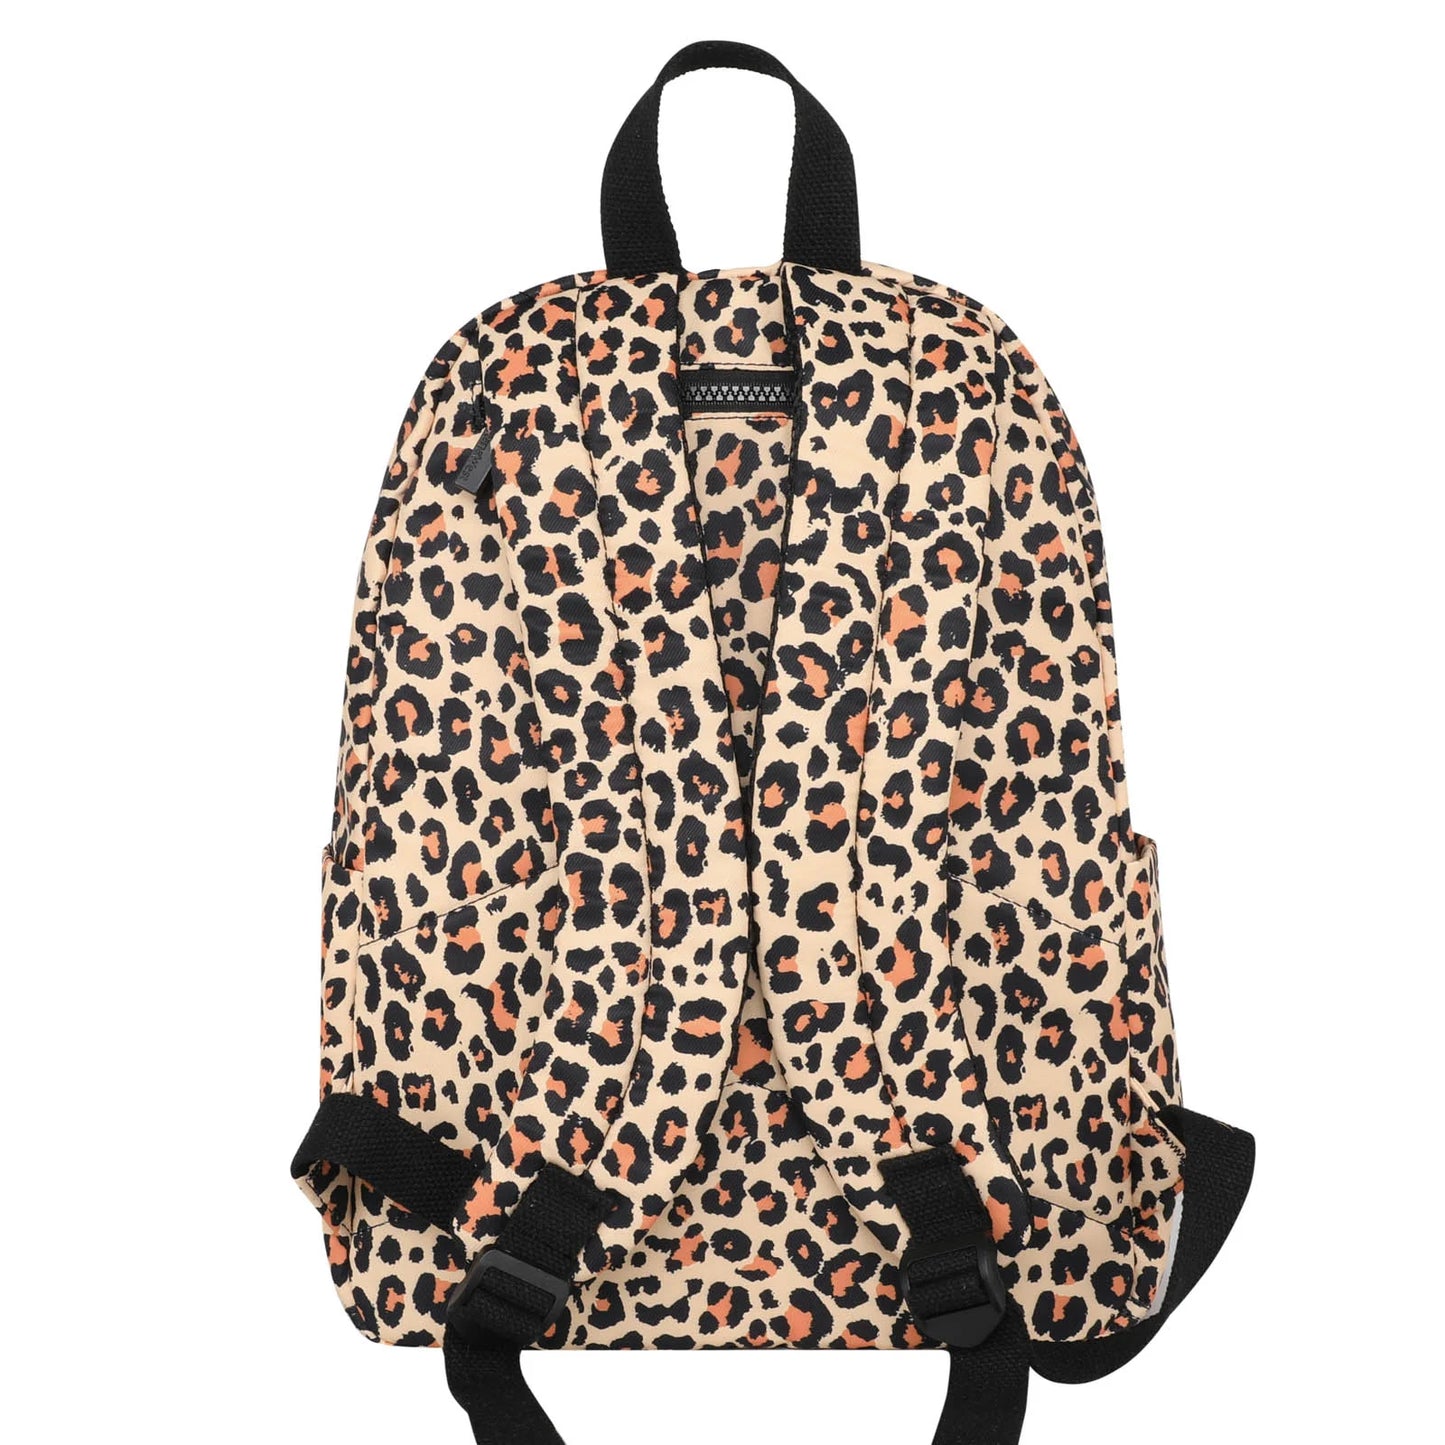 MWB1008 - Montana West Leopard Print Backpack